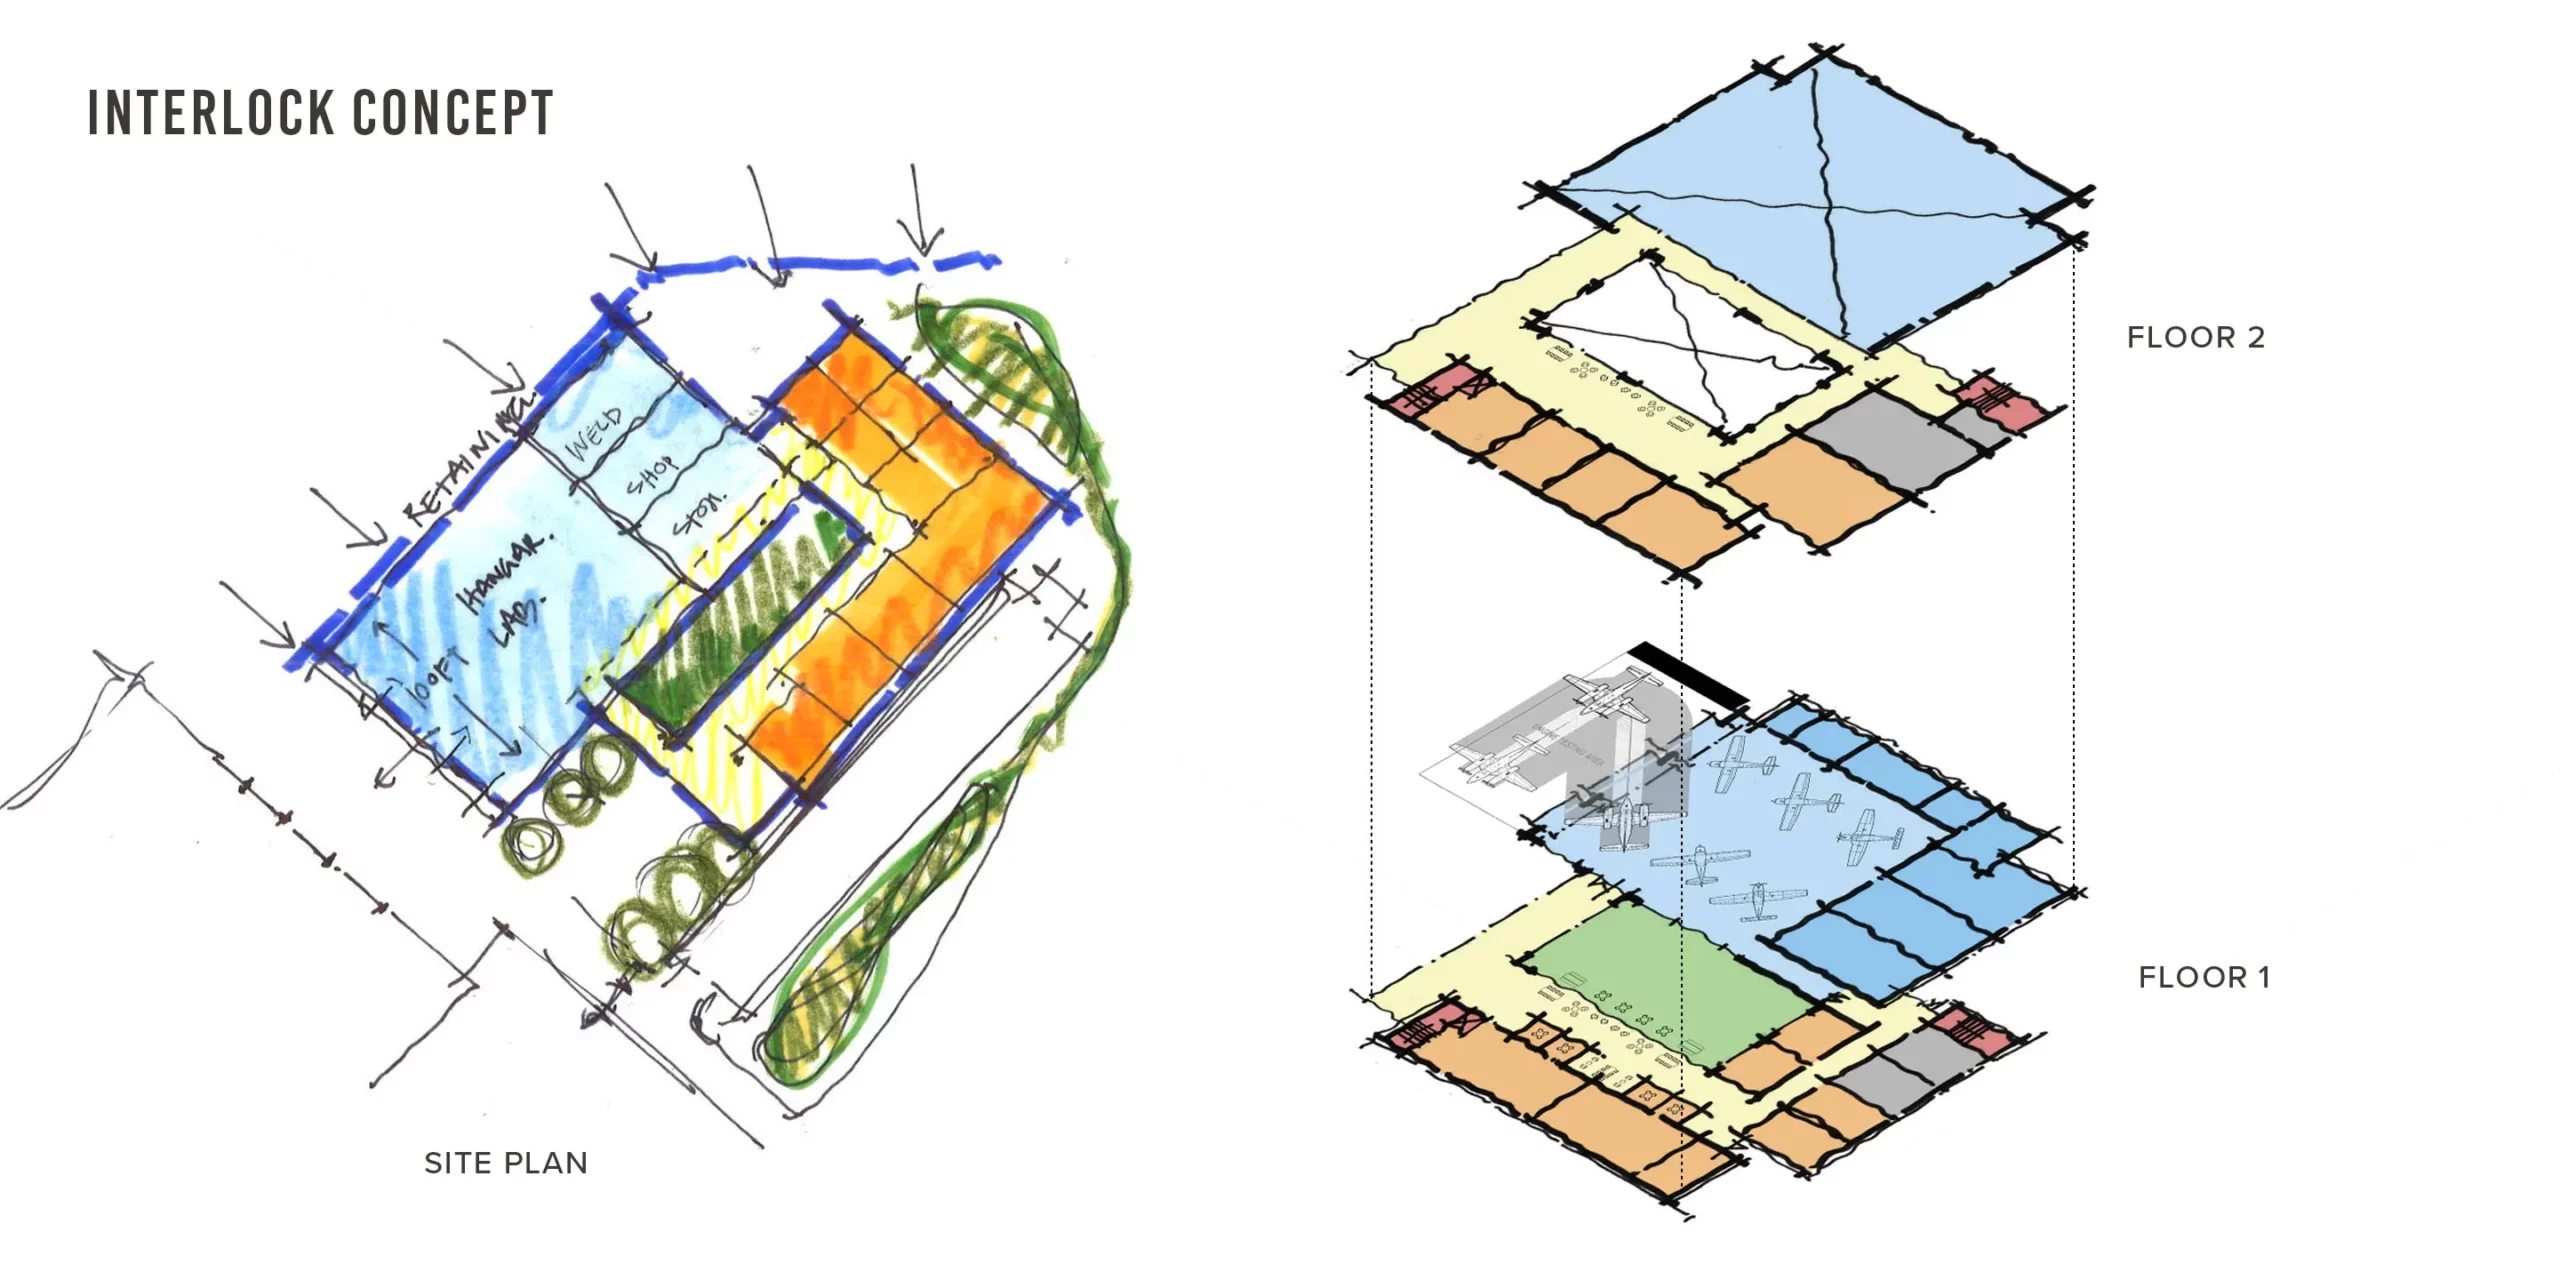 Aviation Training Academy, Interlock Concept, Floor and Site Plans